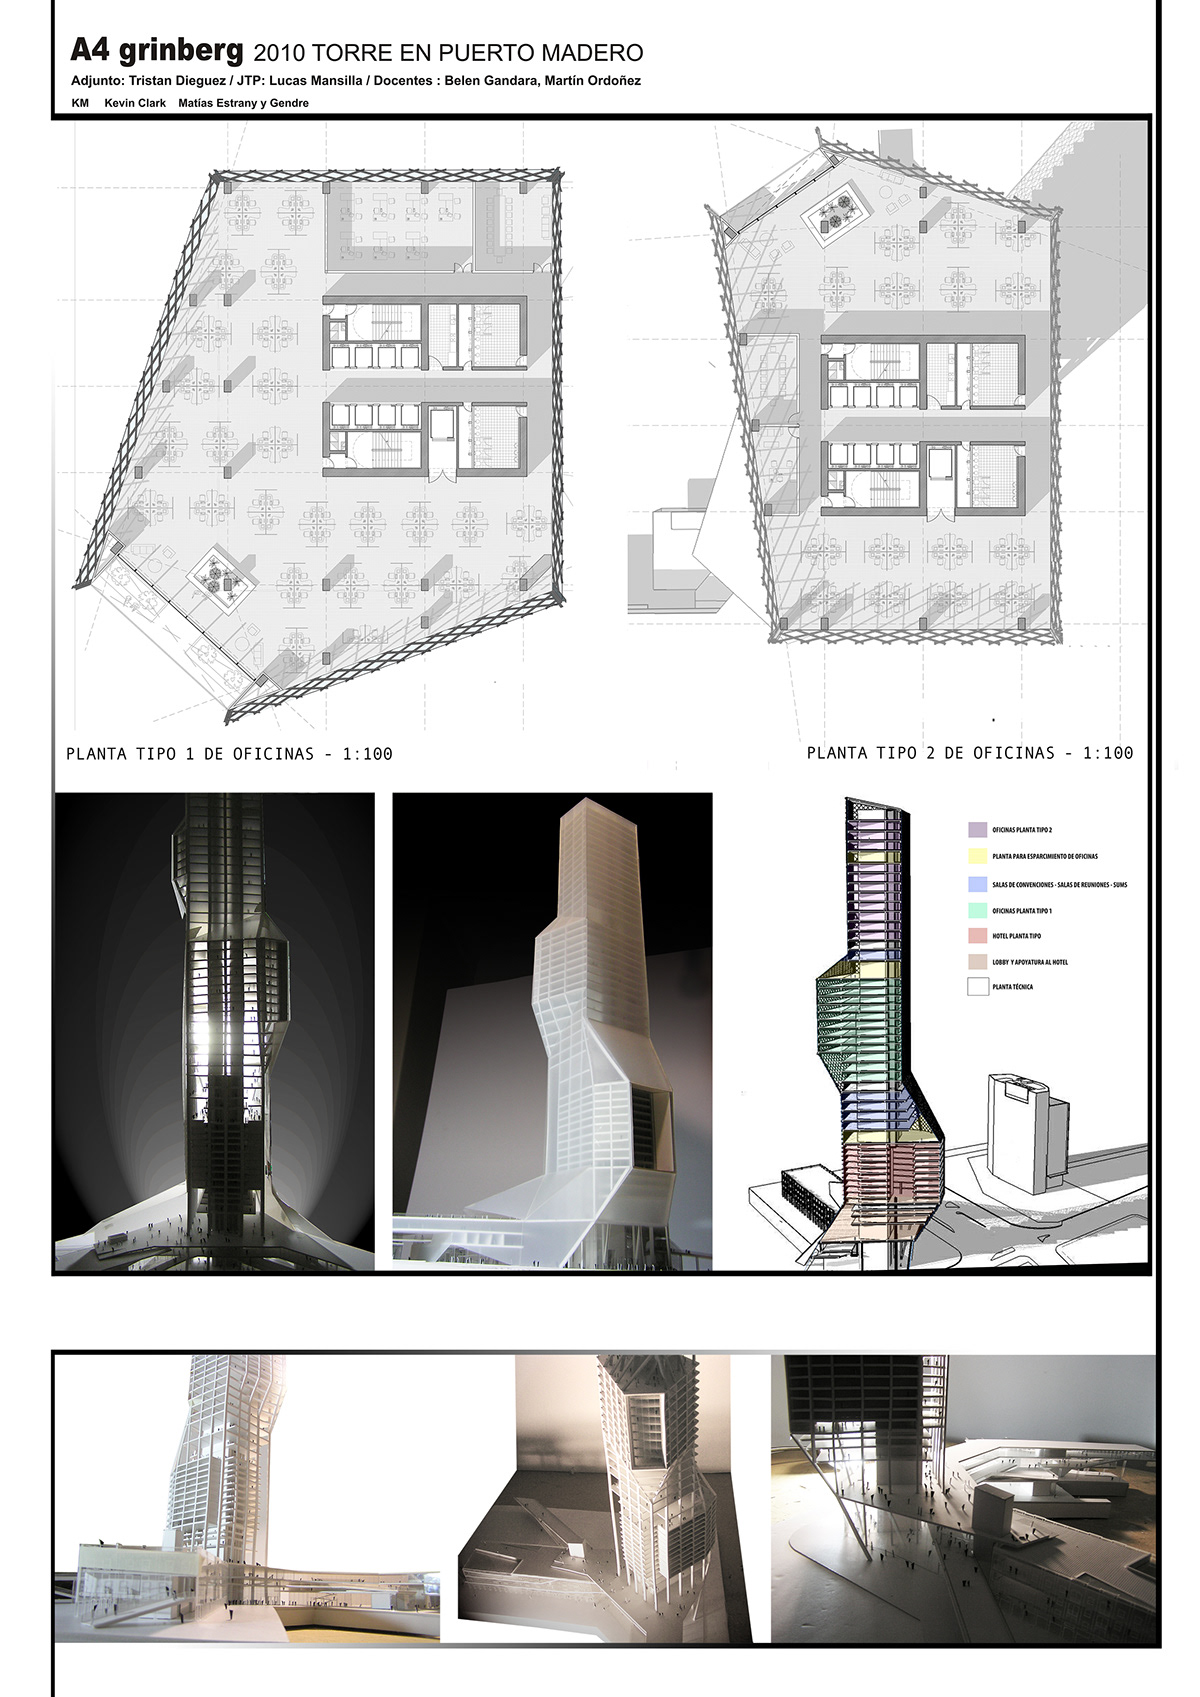 tower torre puerto madero design diseño arquitectura Maqueta scale model